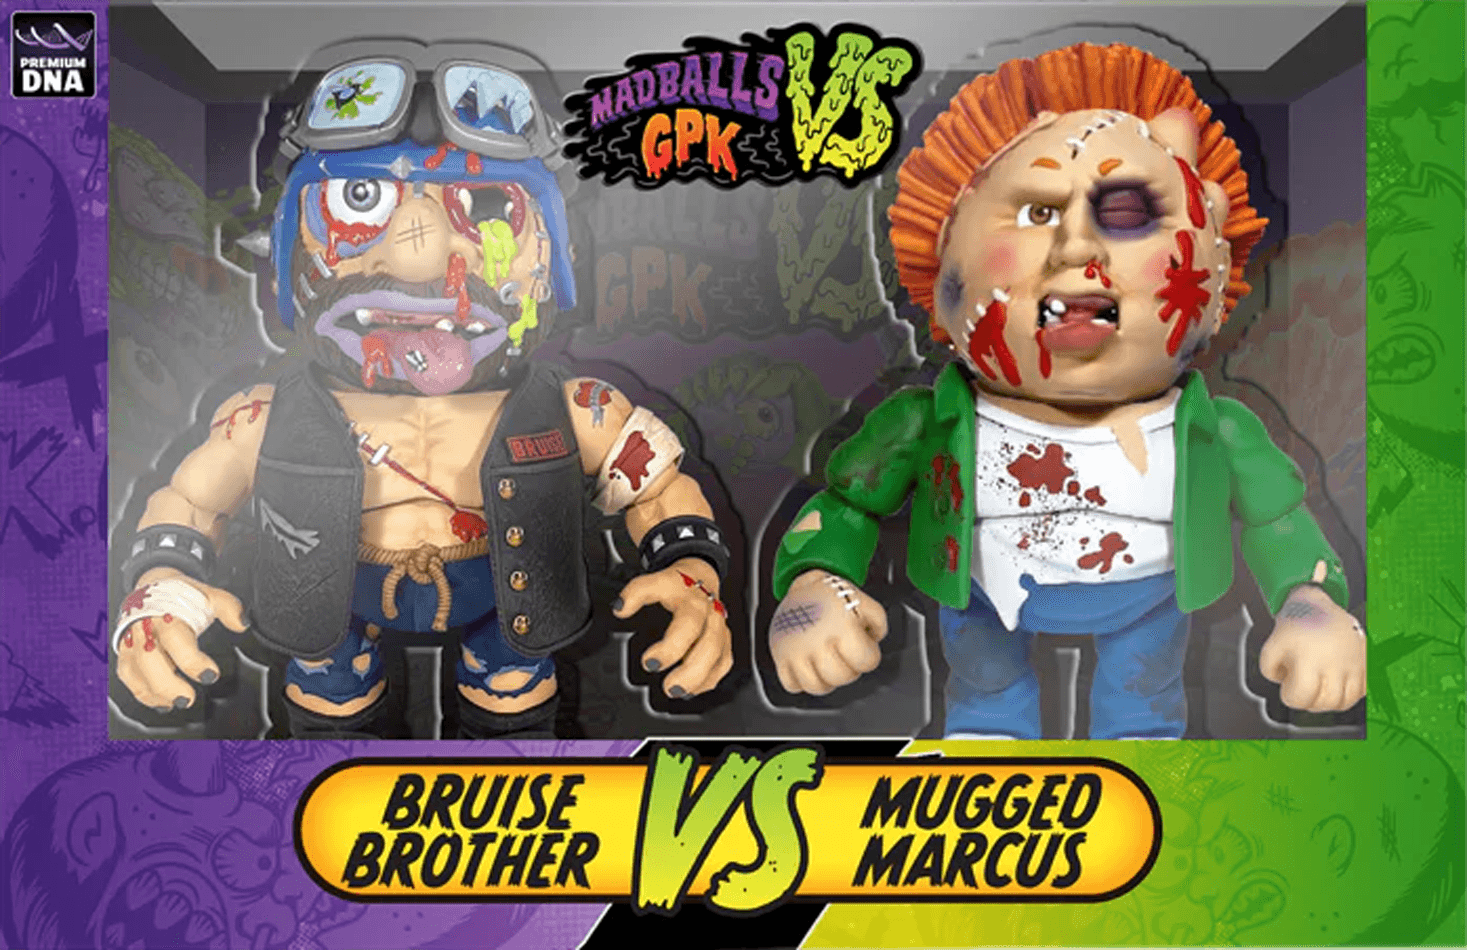 Madballs vs GPK - Mugged Marcus vs Bruise Brother Action Figure Set